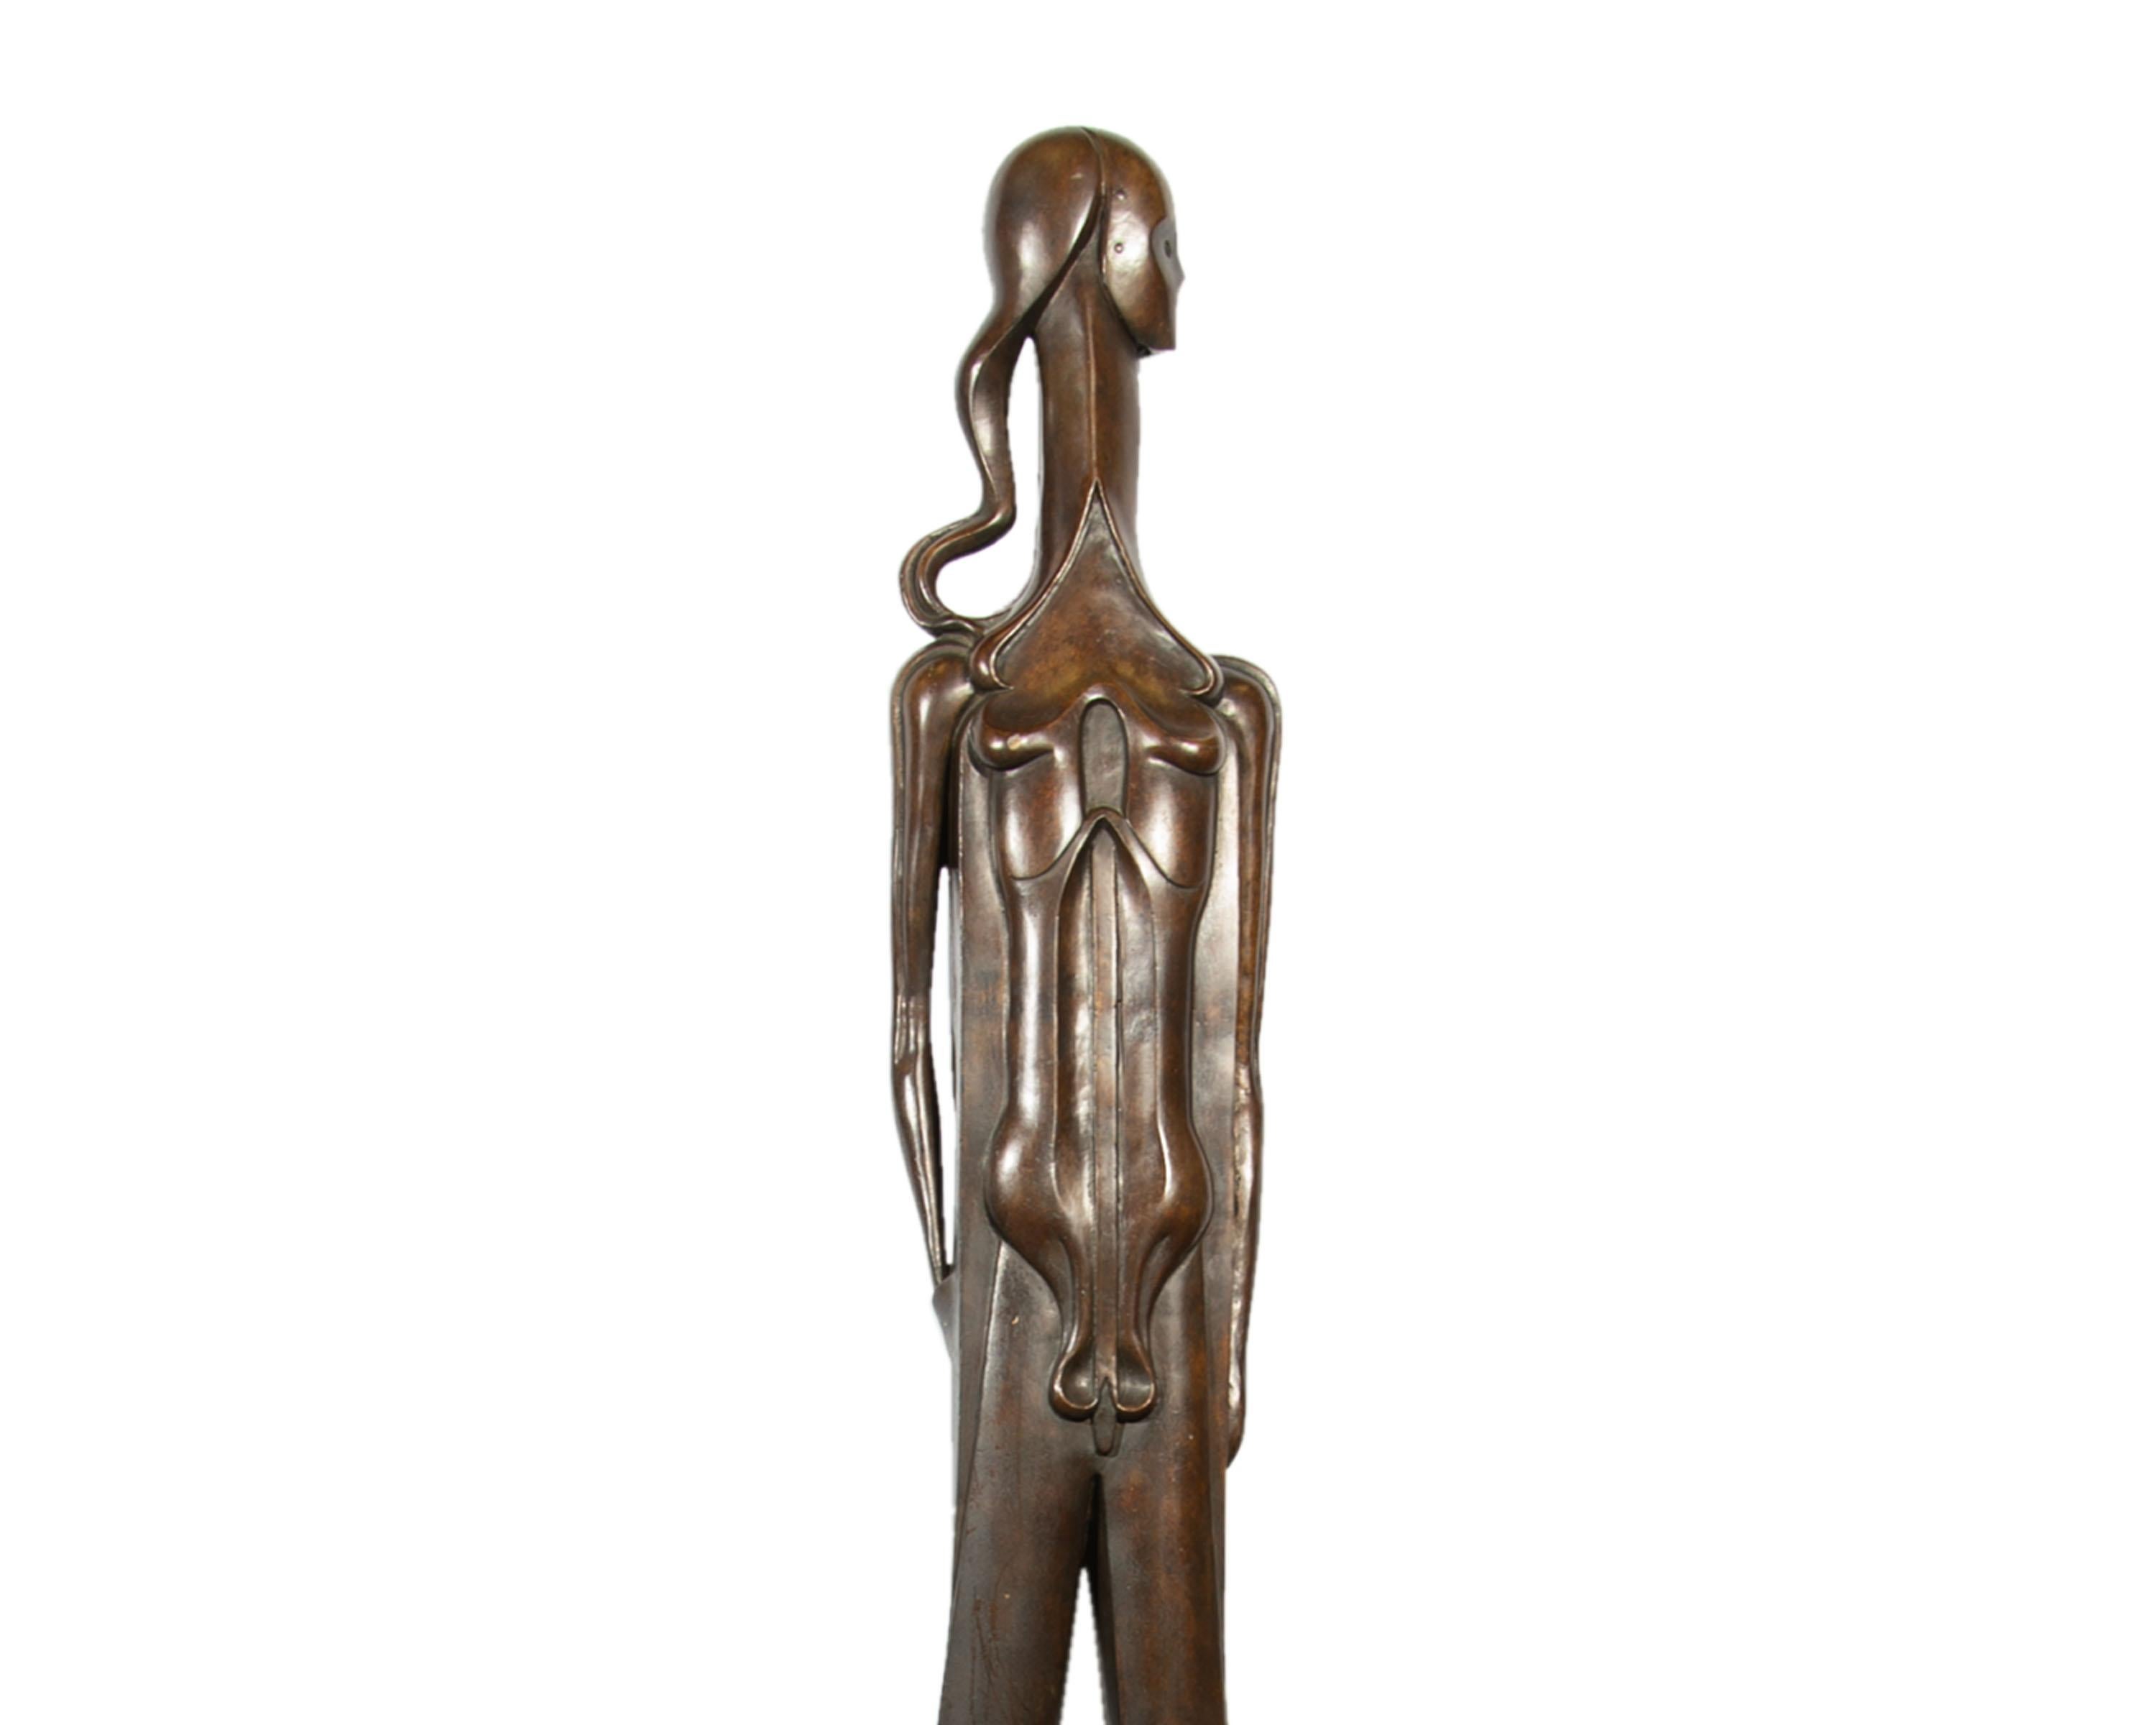 American Isidore Grossman Signed 1955 “Fegele” Bronze Sculpture of a Figure For Sale